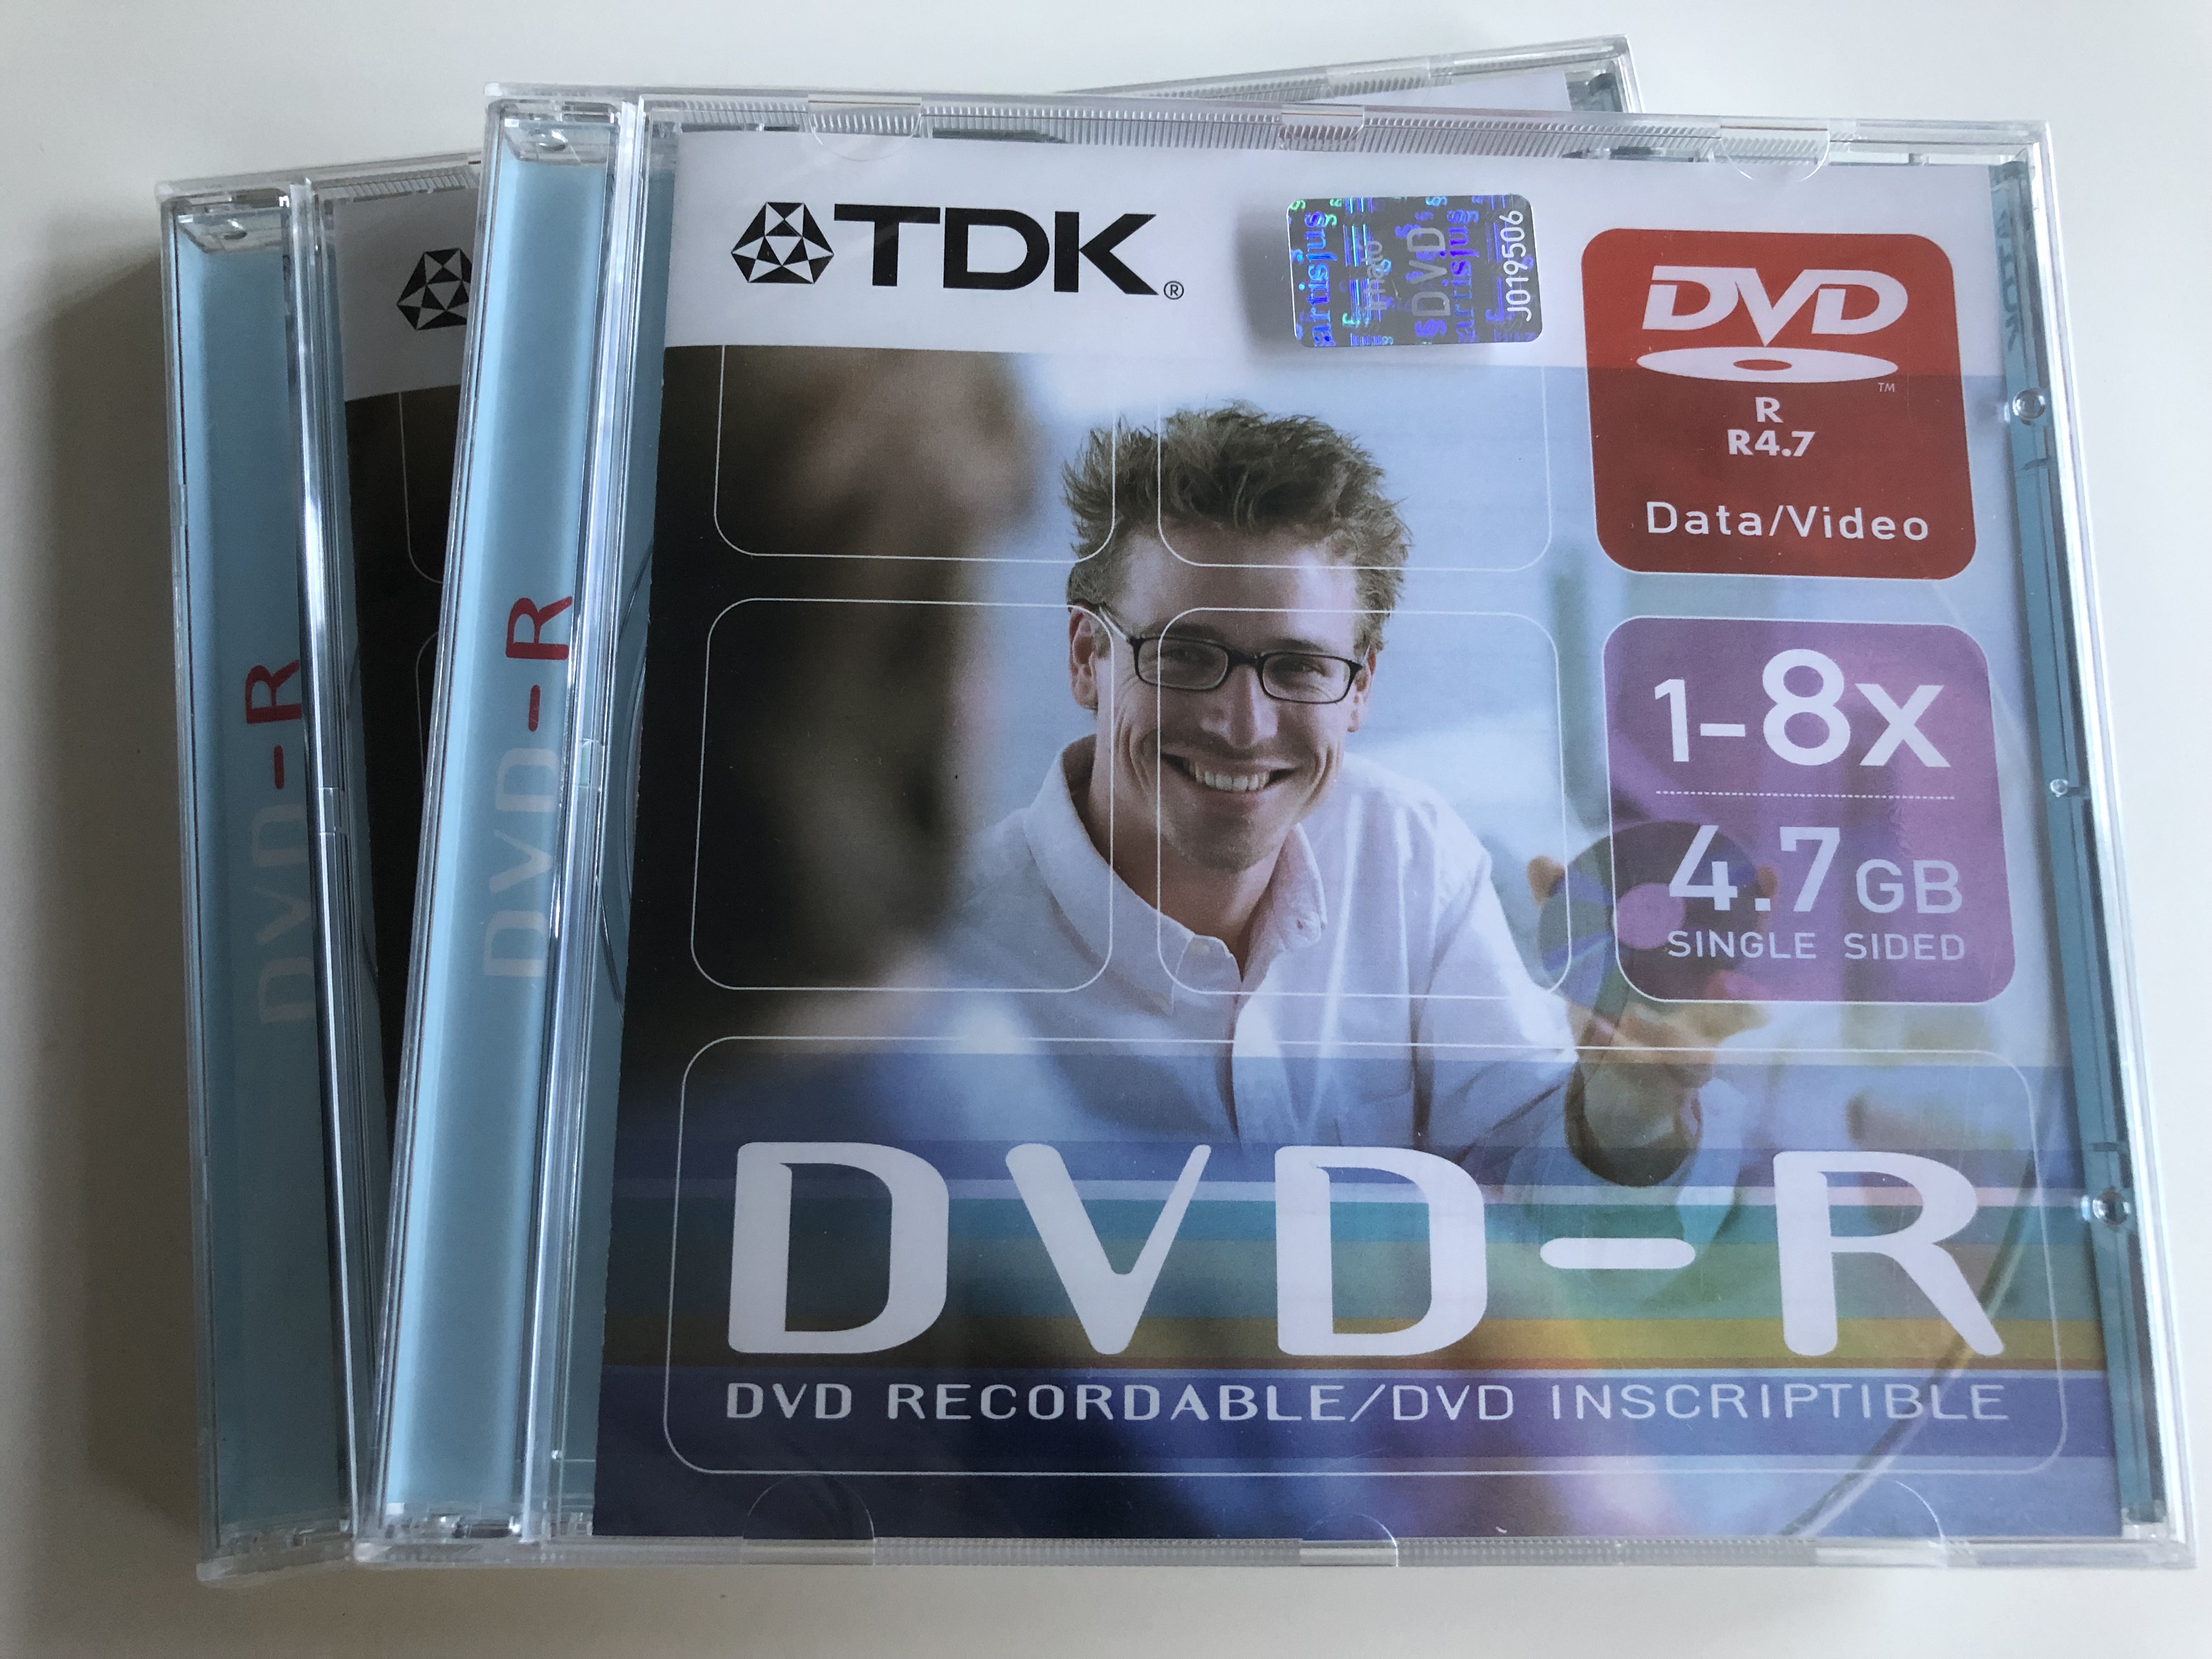 tdk-dvd-r-recordable-inscriptible-r-4.7-data-video-1-8x-speed-4.7-gb-single-sided-1-.jpg